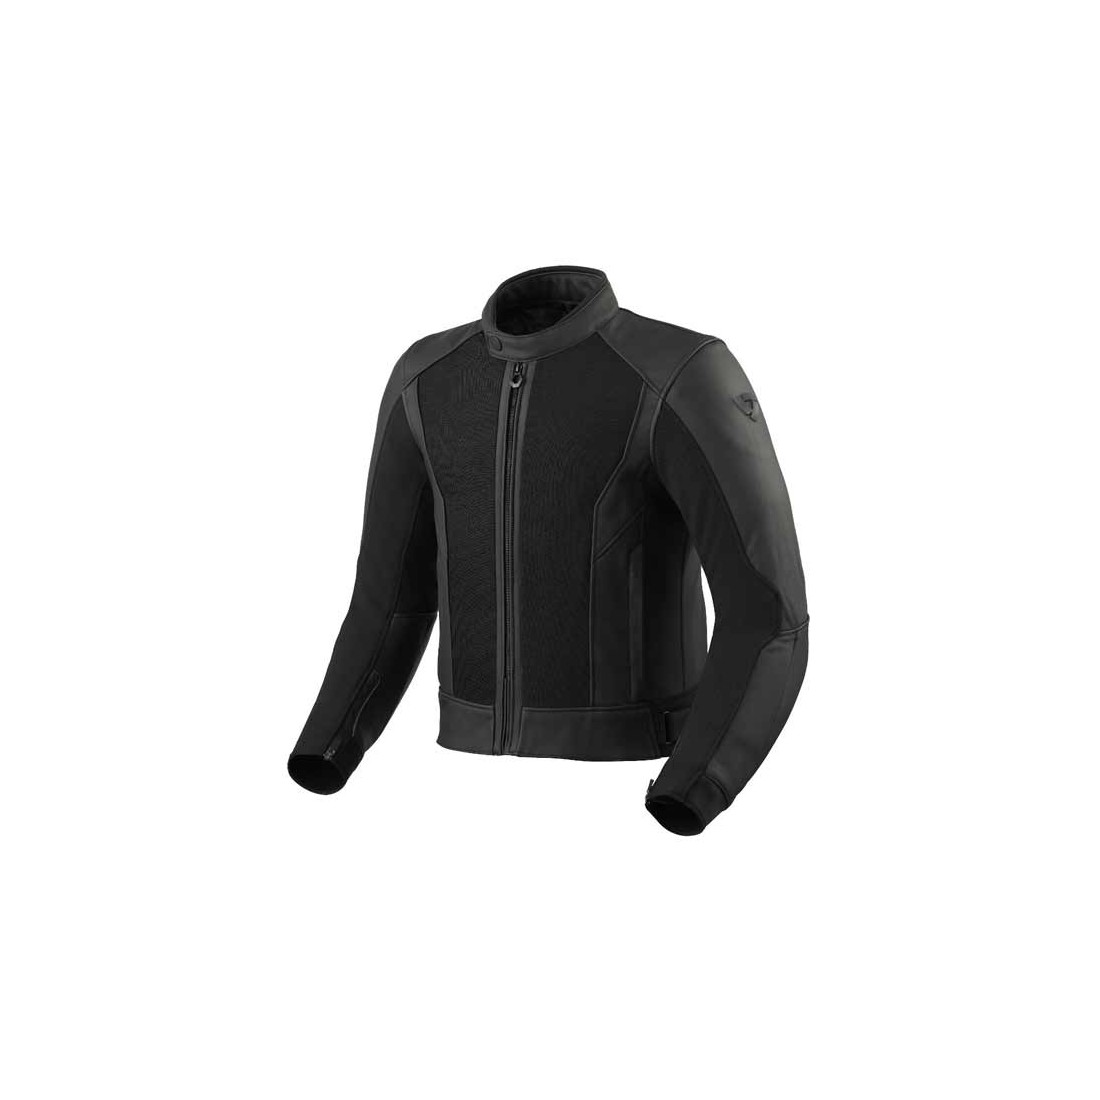 Revit Ignition 4 H2O leather motorcycle jacket